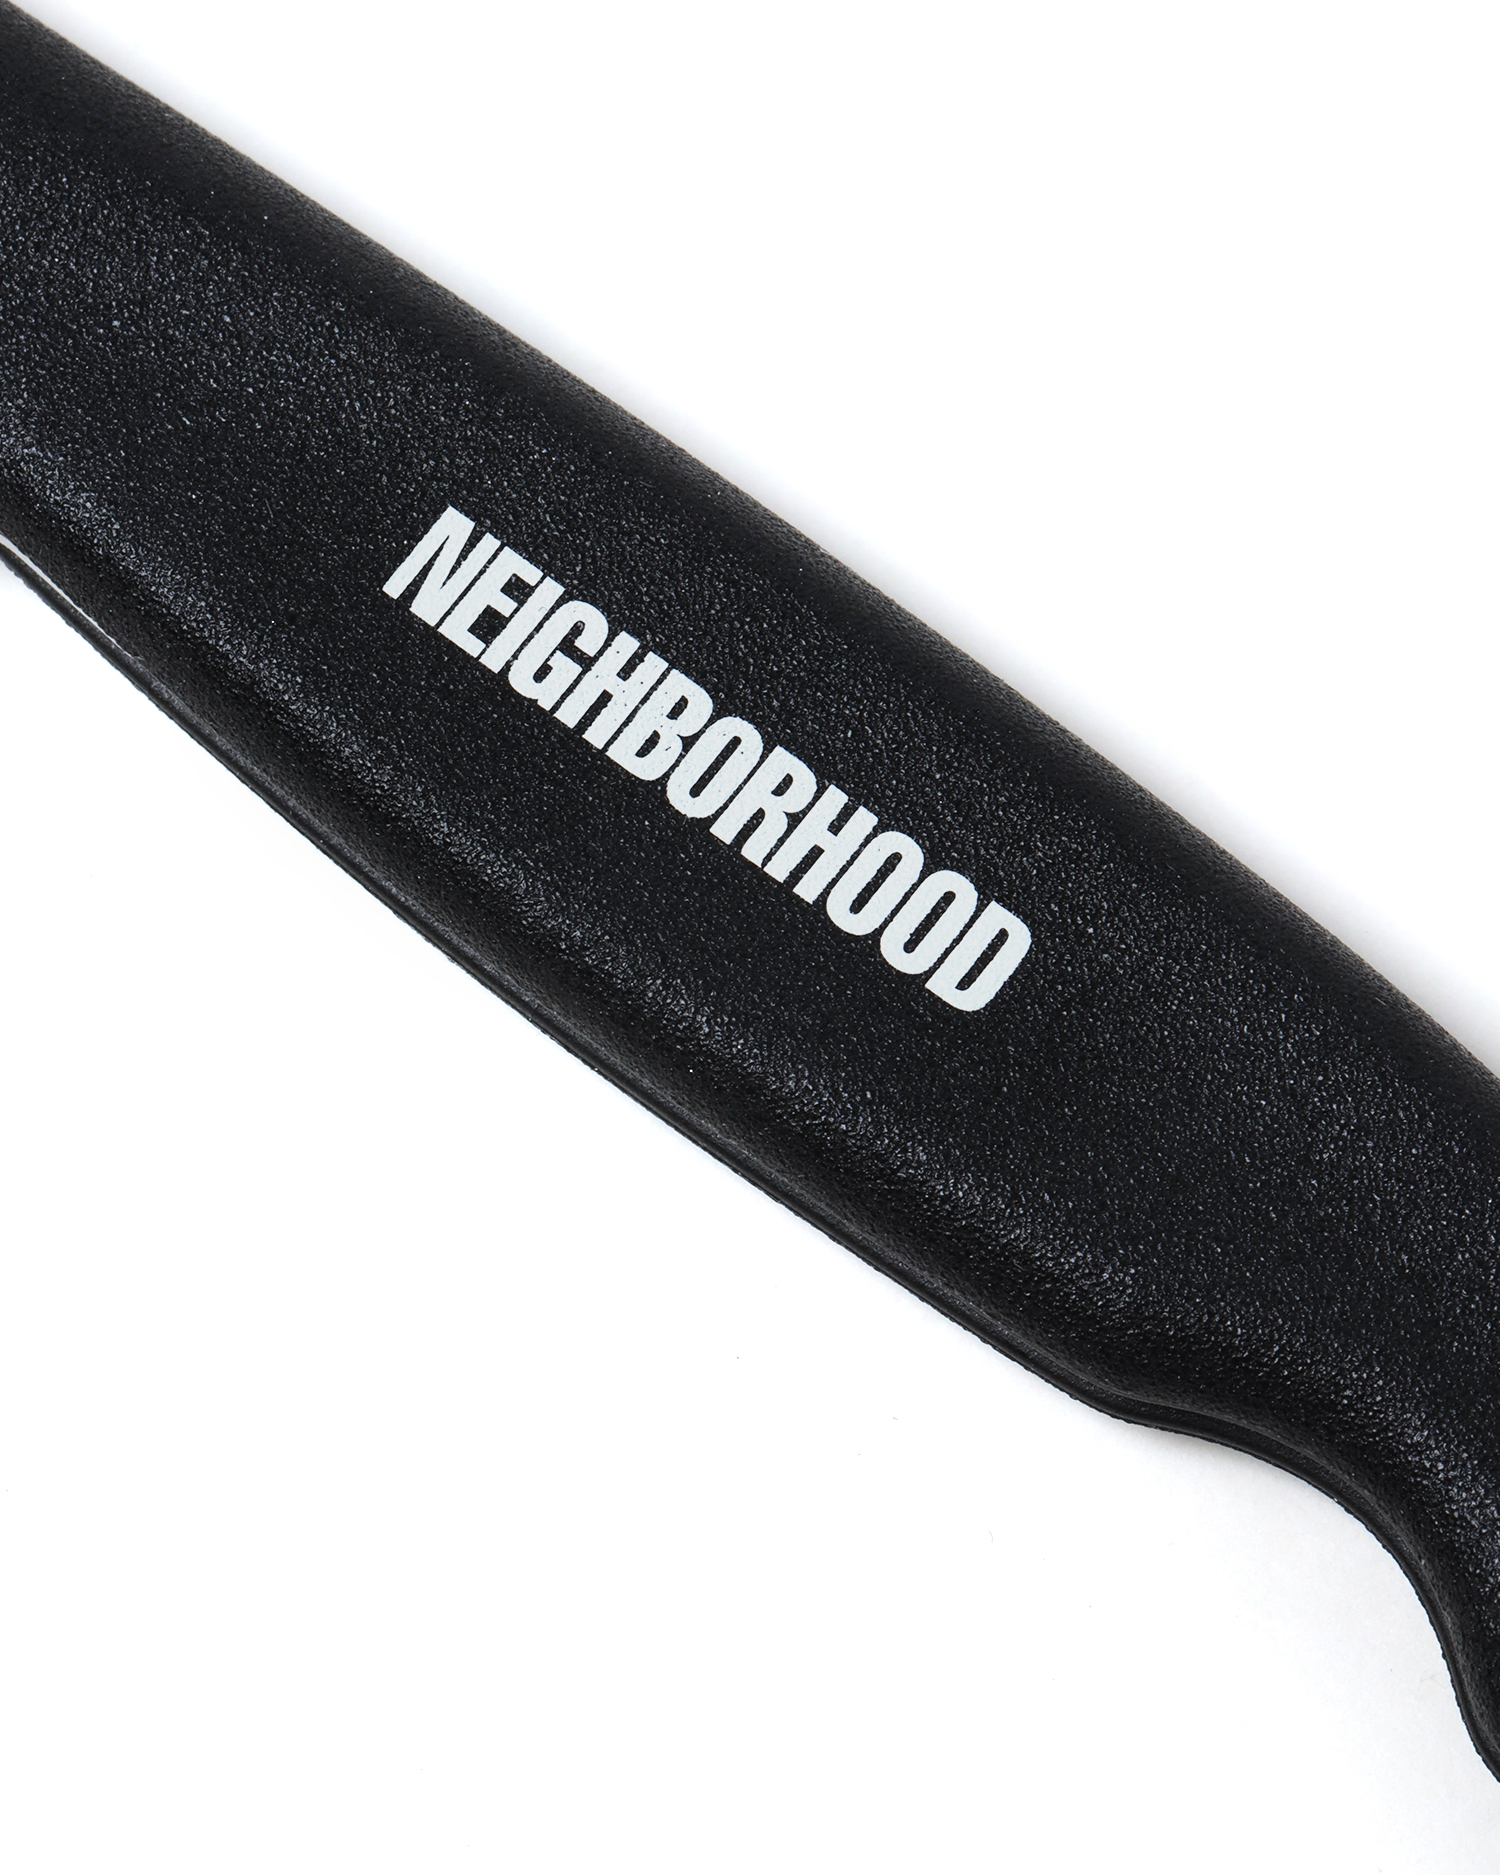 NEIGHBORHOOD VICTRINOX /SS-FOLDING KNIFE - 調理器具